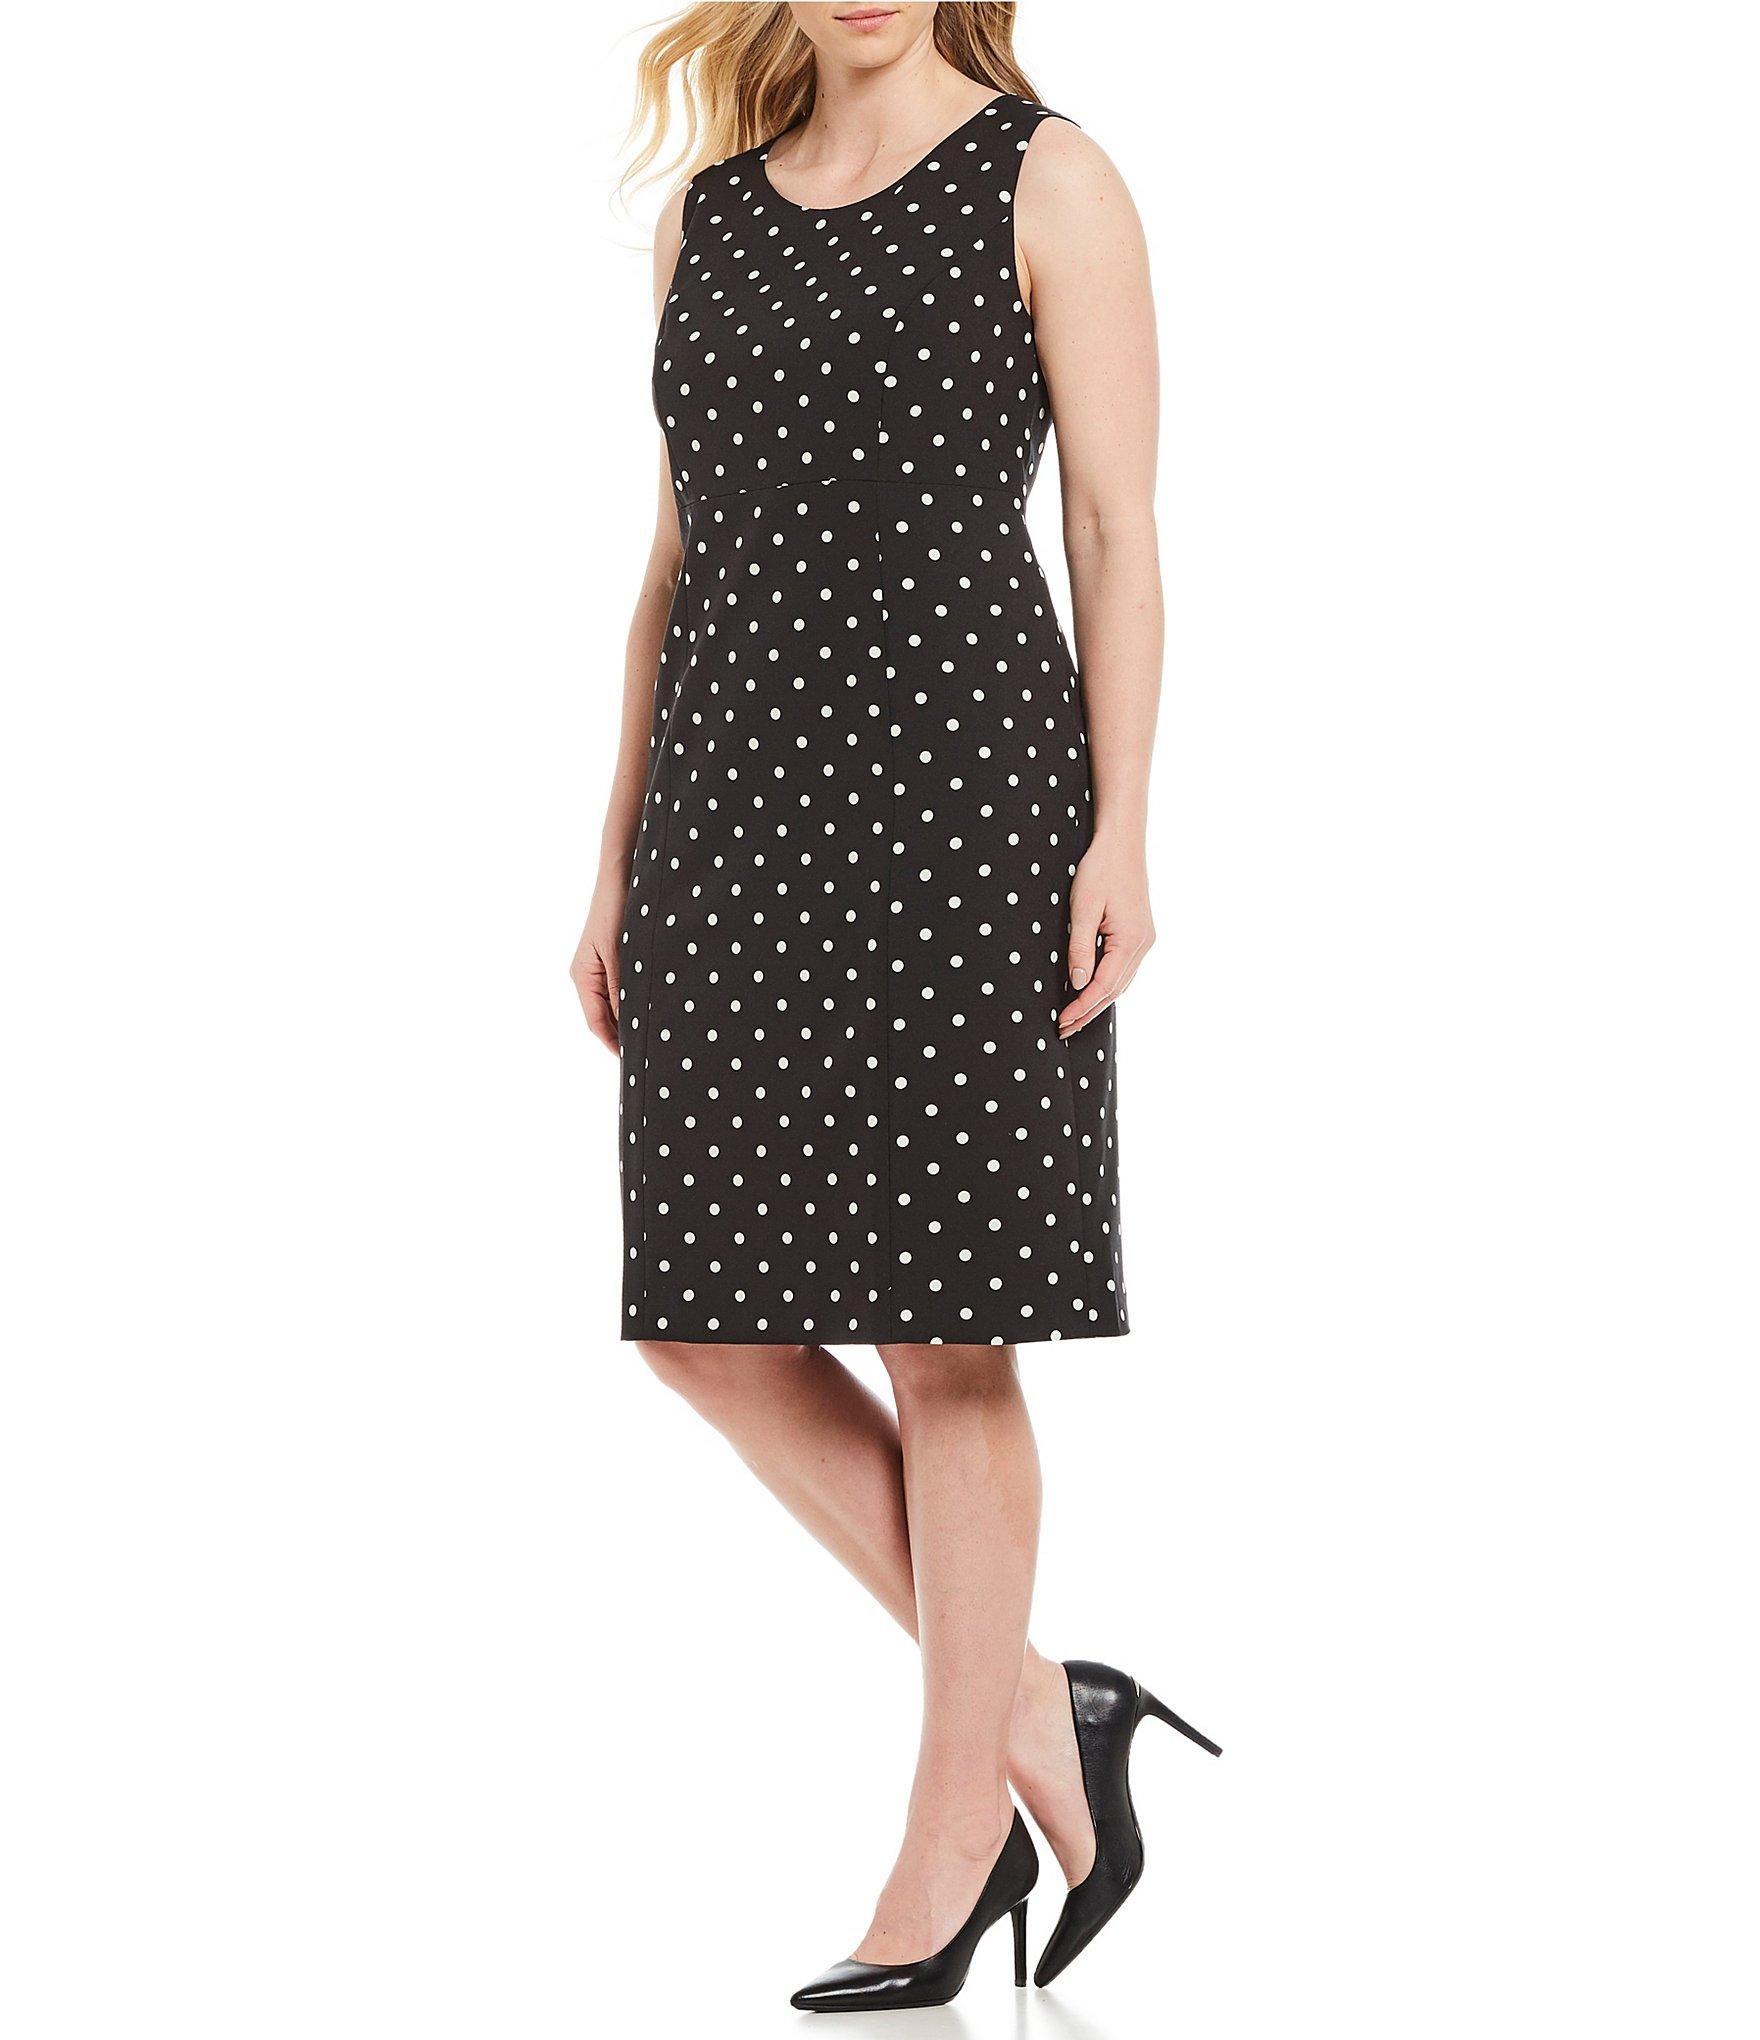 Lyst - Kasper Plus Size Polka Dot Sleeveless Crepe Sheath Dress in Black